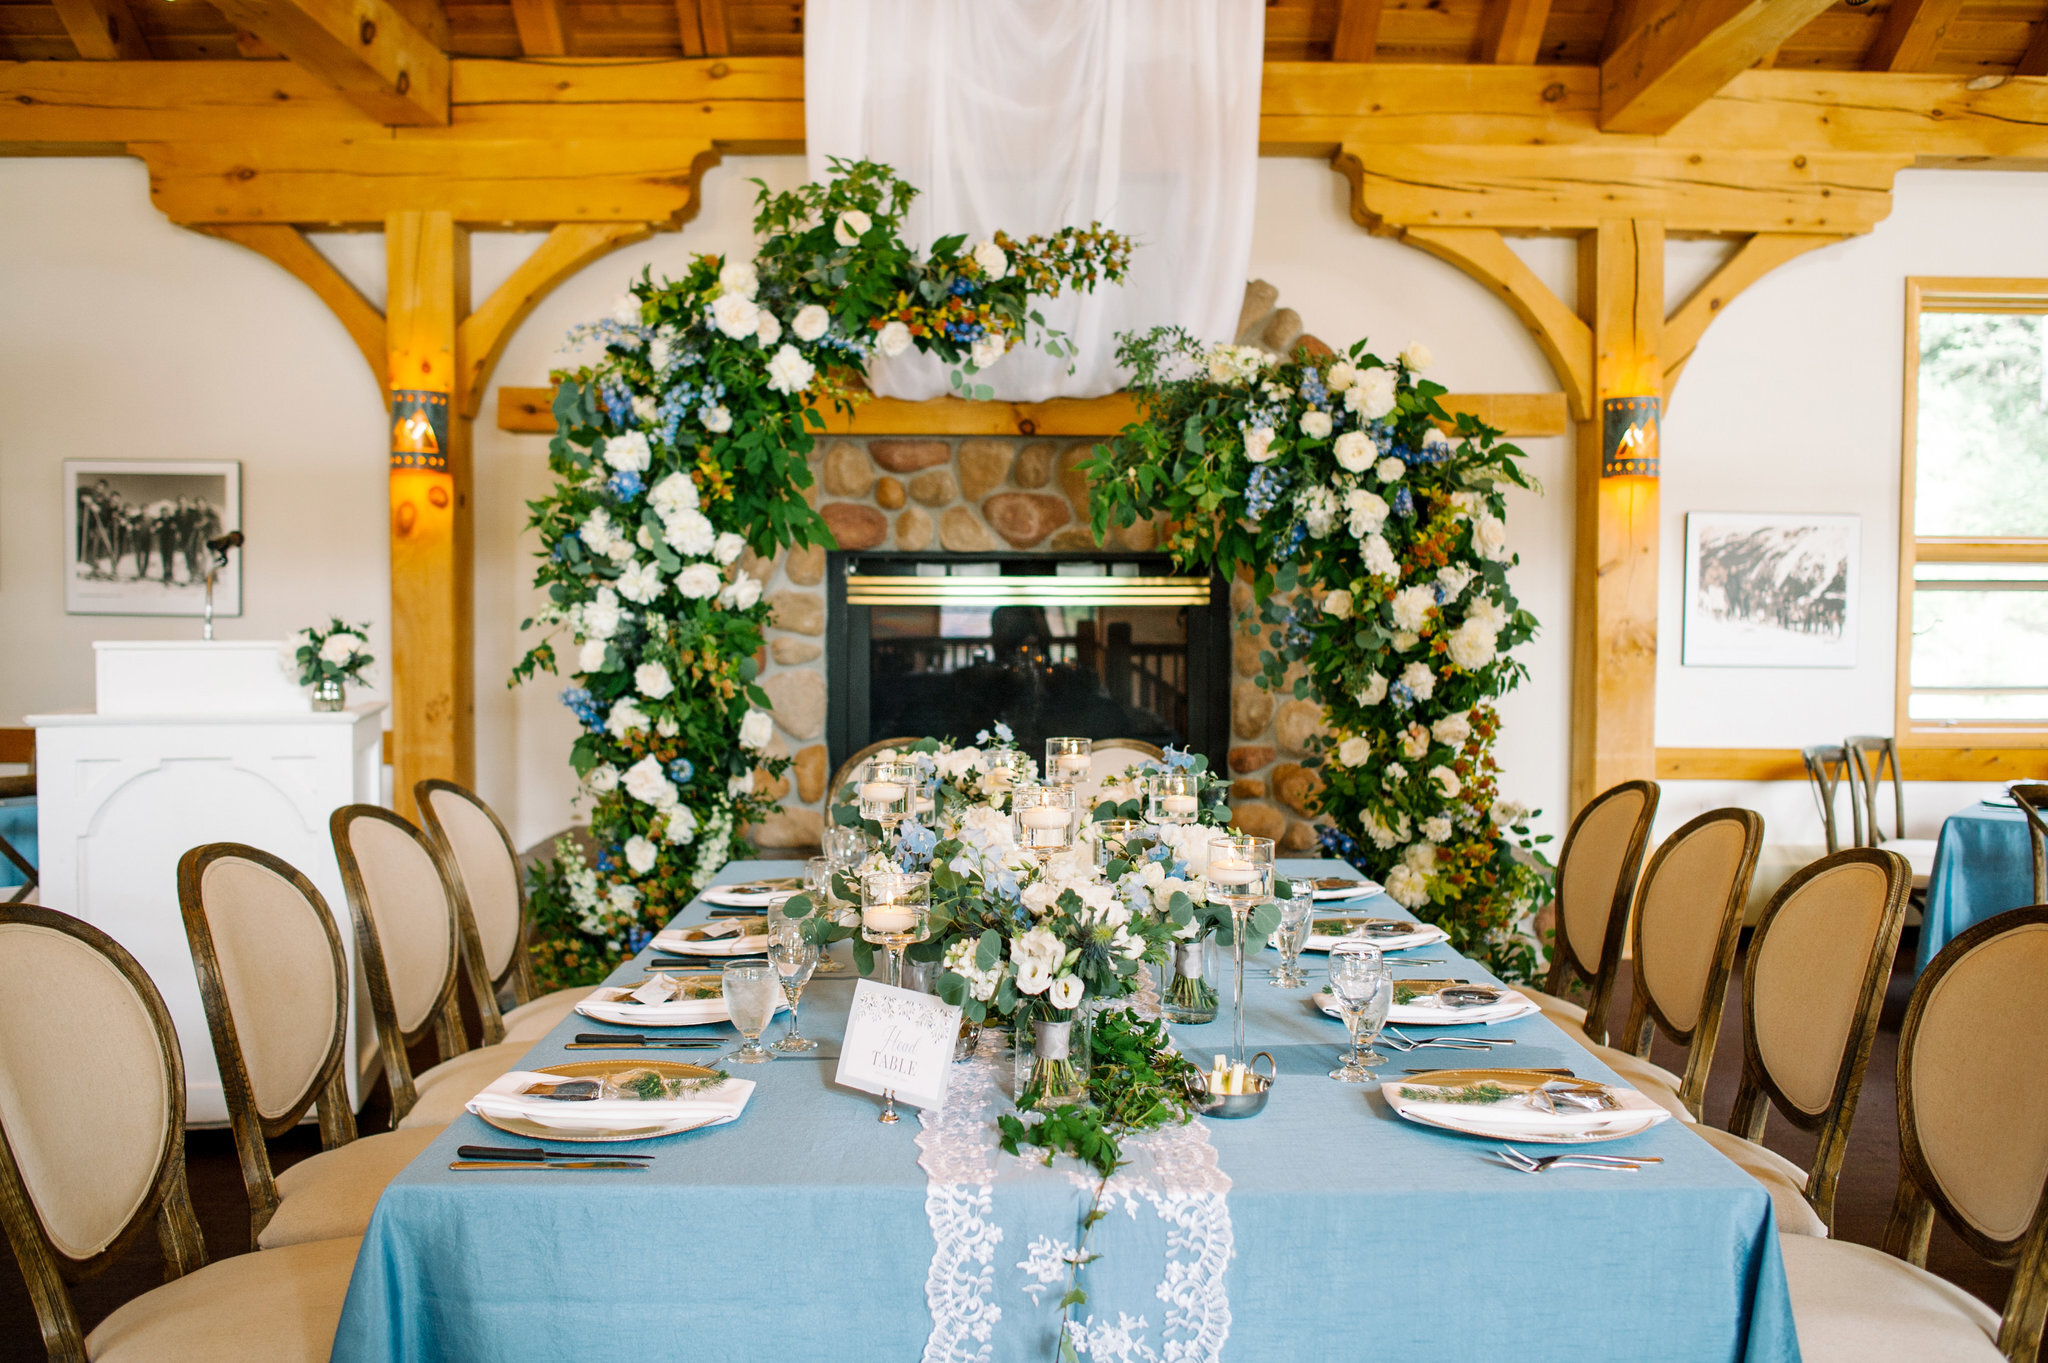 flower-artistry-beautiful-wedding-venue-dinner-table (Copy)